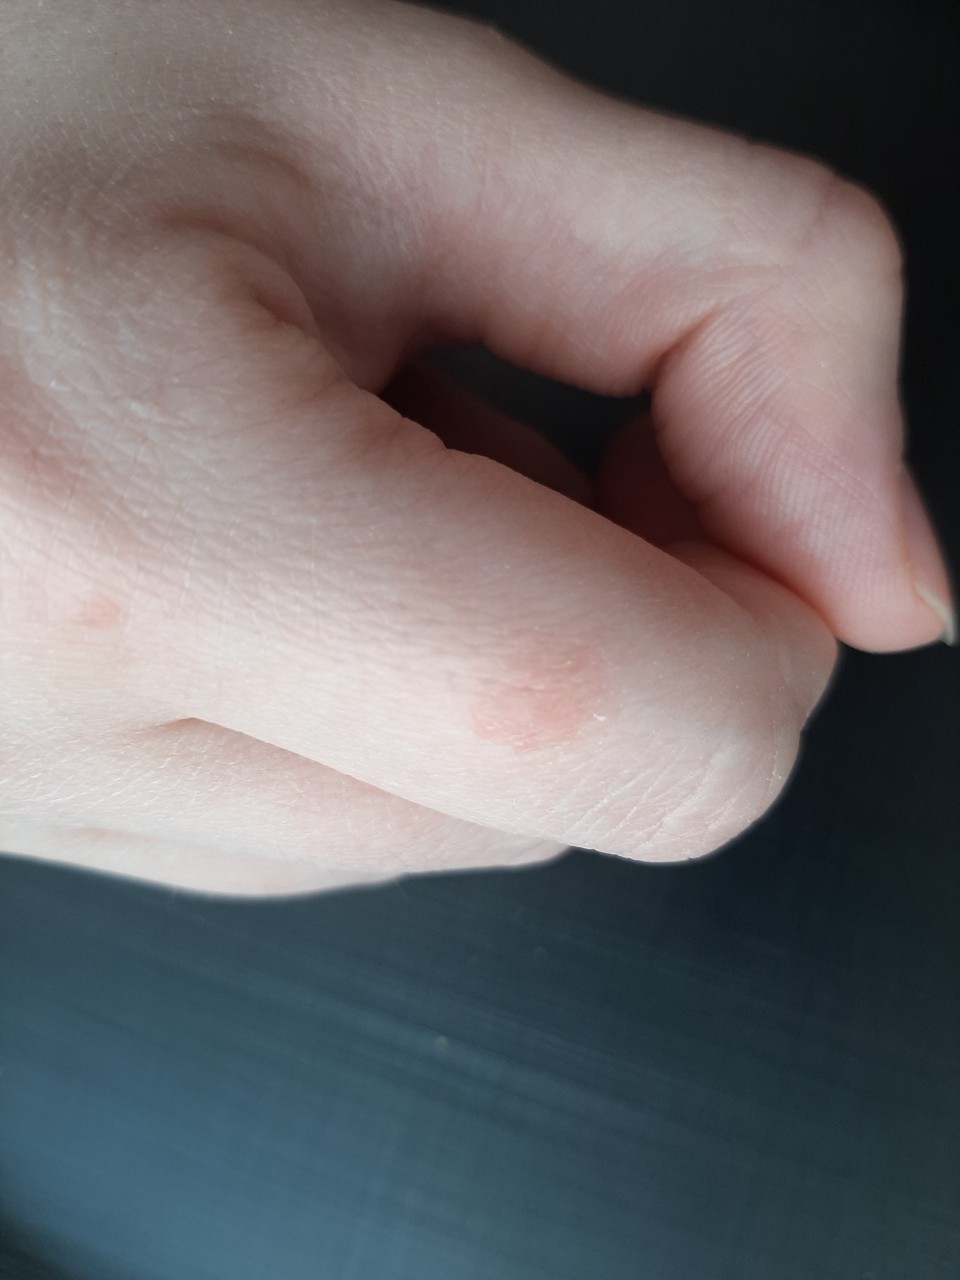 Красное шершавое пятно на пальце руки